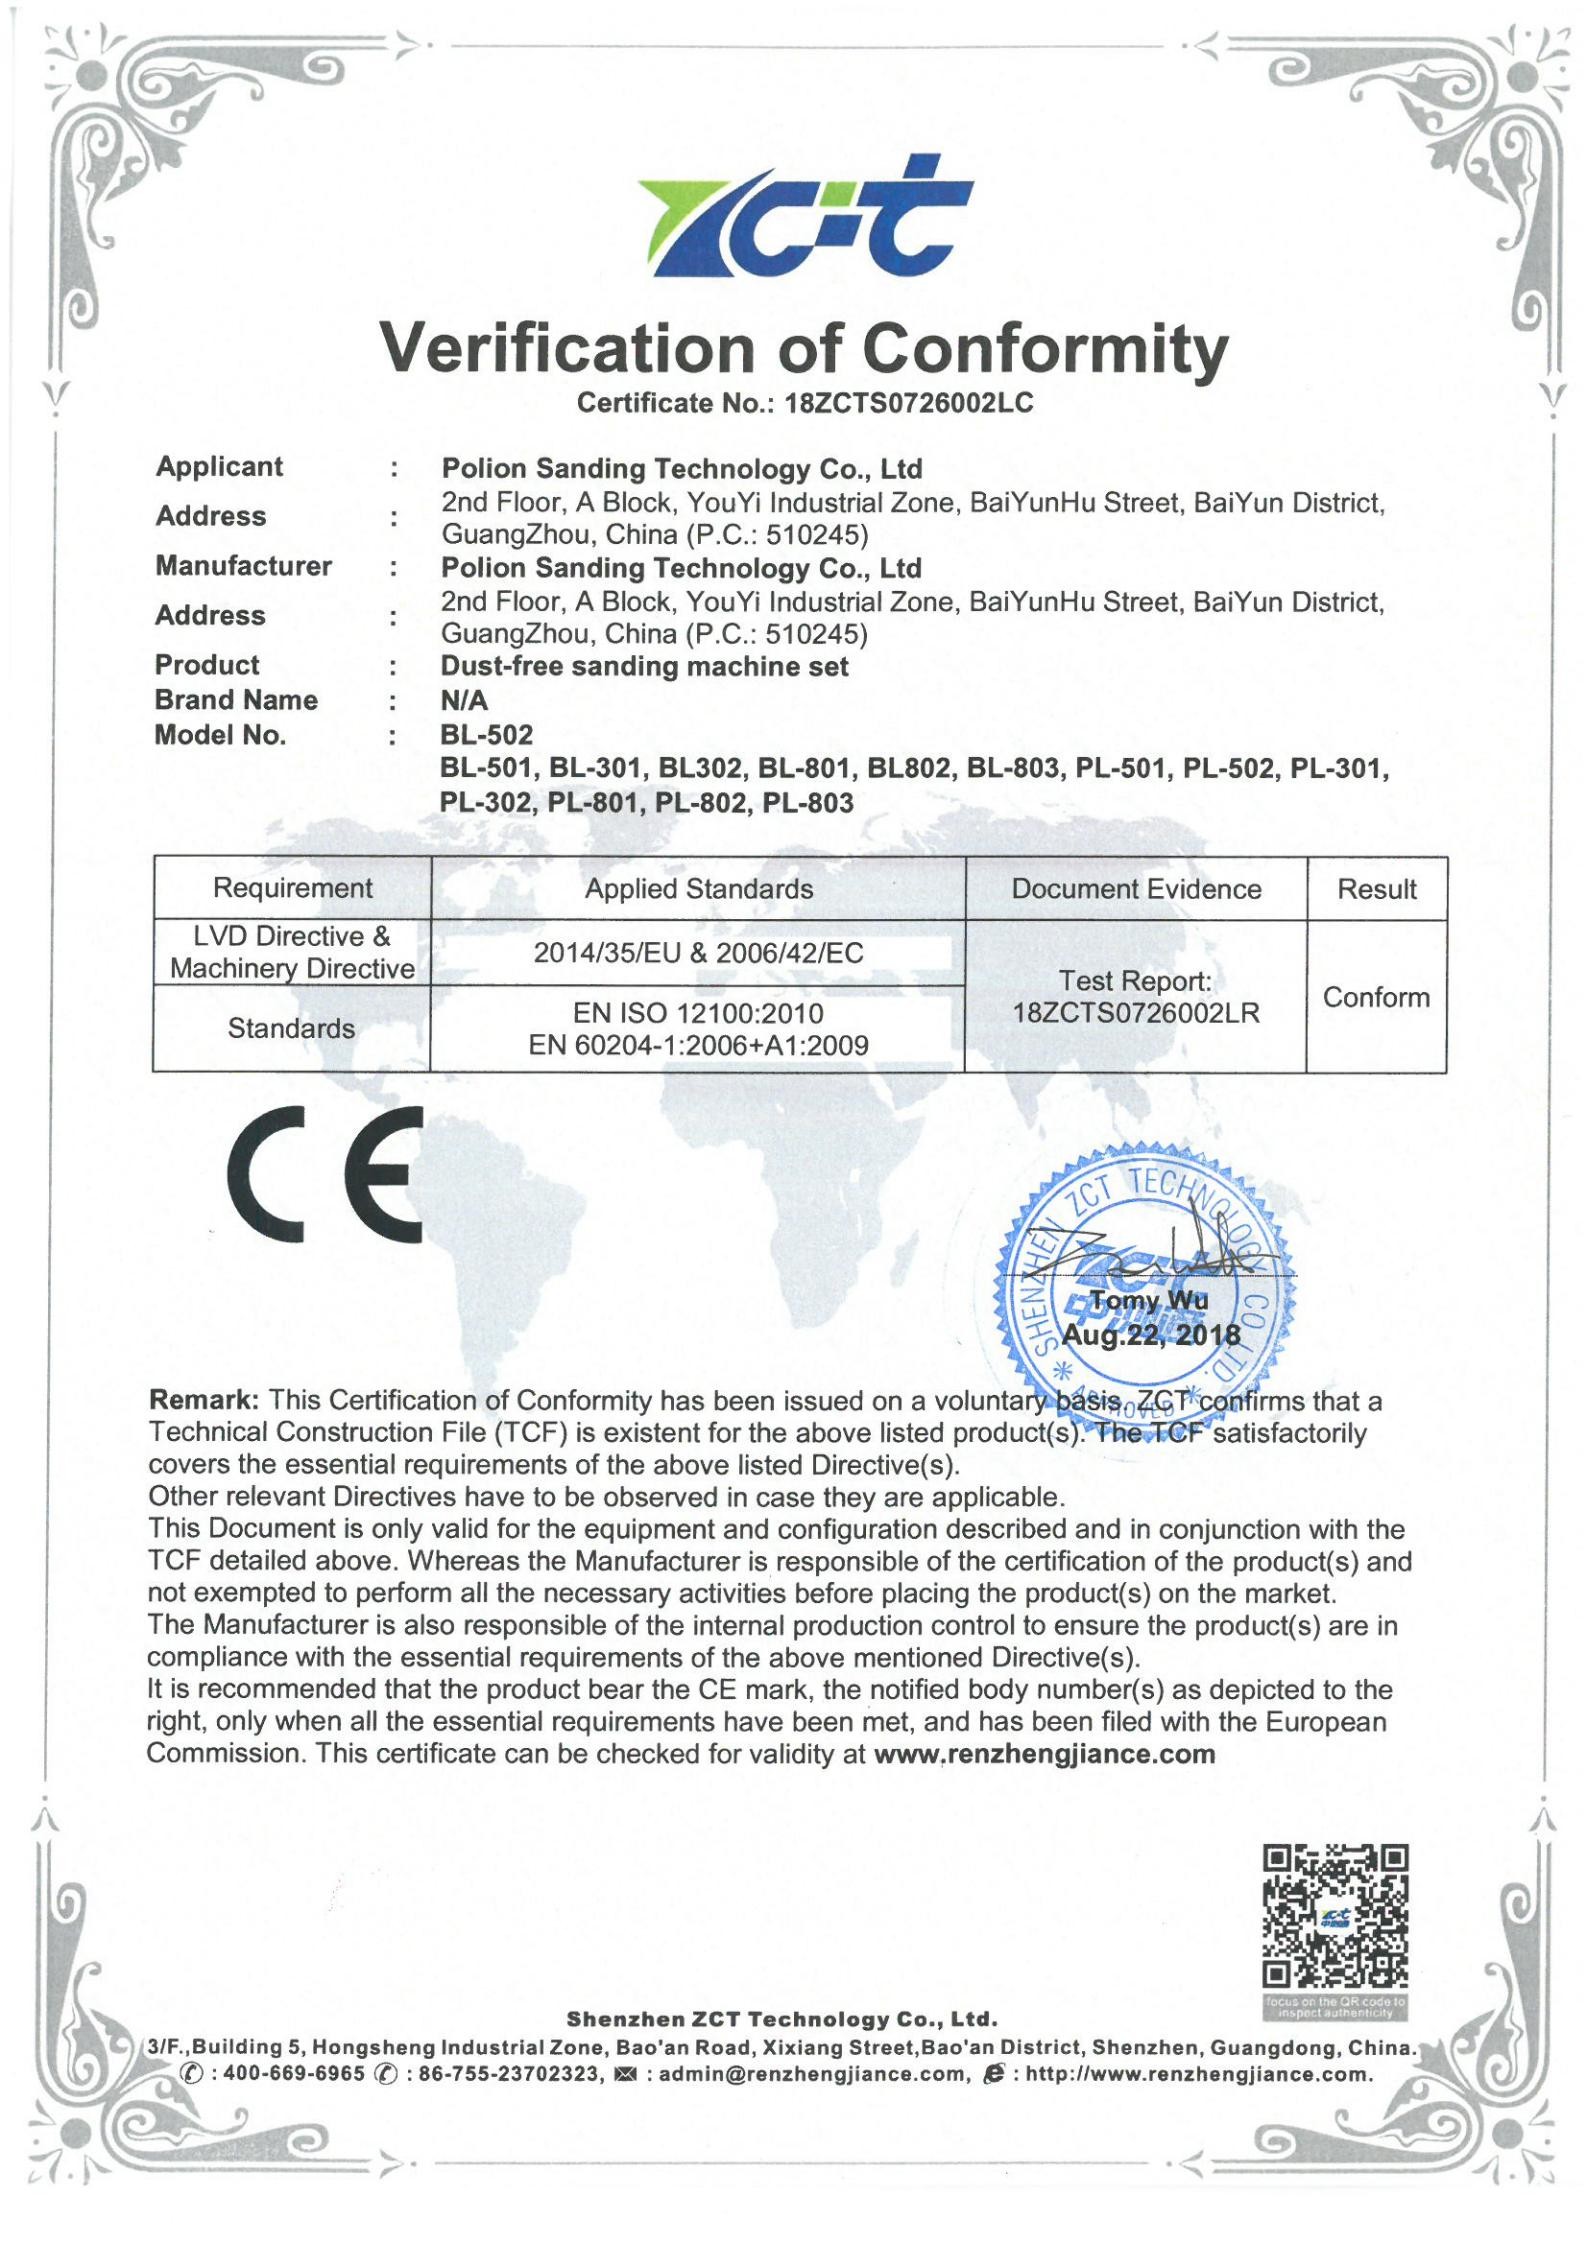 China Polion Sanding Technology Co., LTD Certification